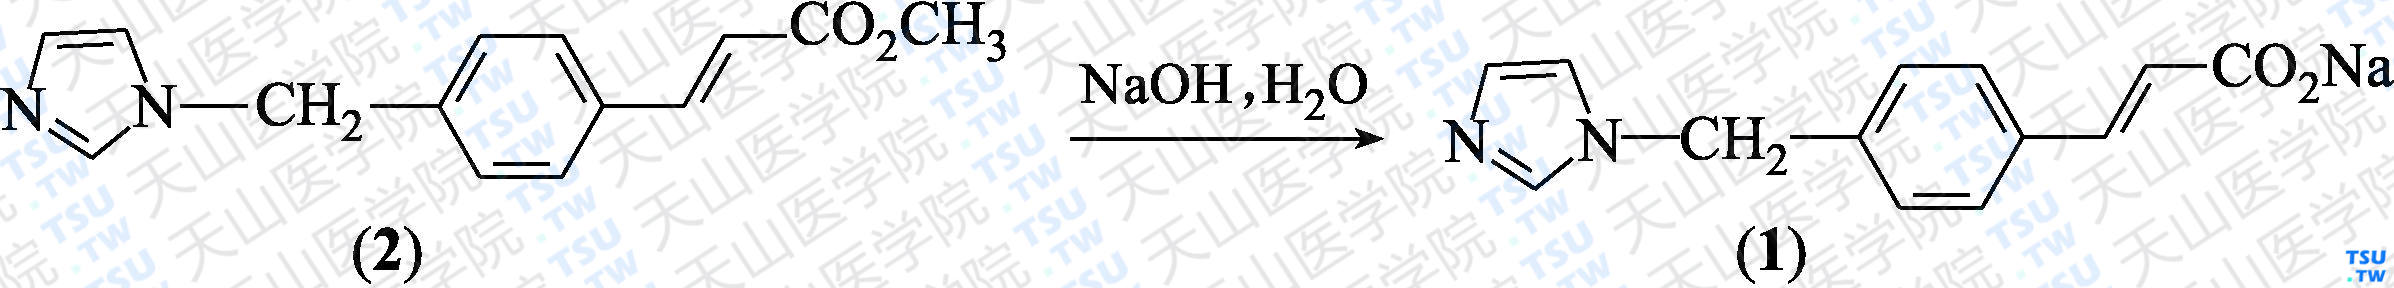 奥扎格雷钠（分子式：C<sub>13</sub>H<sub>11</sub>N<sub>2</sub>O<sub>2</sub>Na）的合成方法路线及其结构式